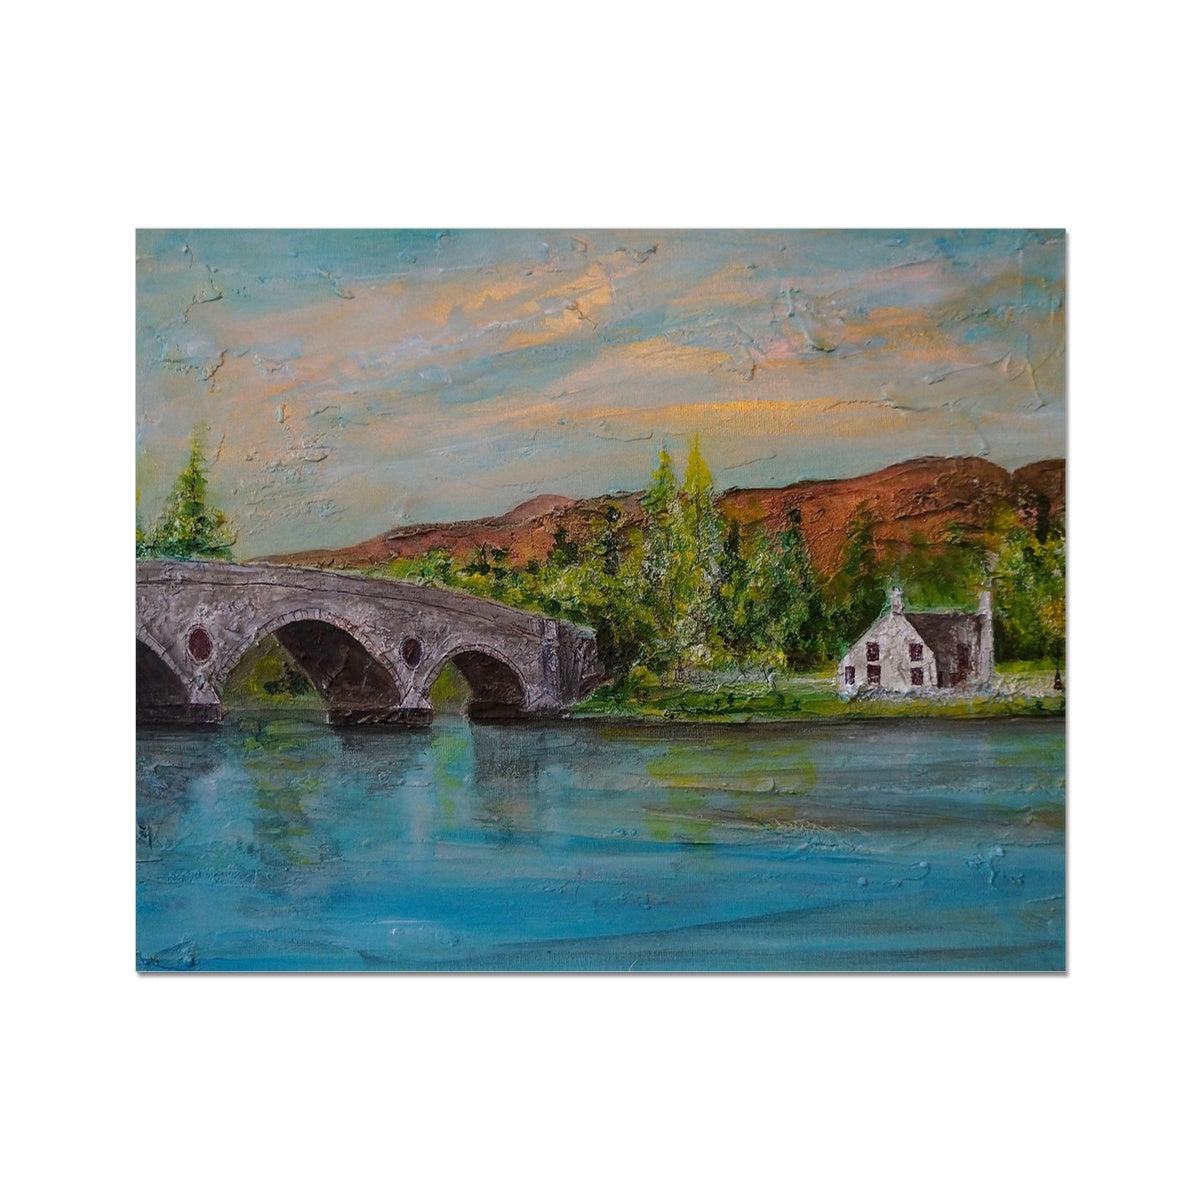 Kenmore Bridge ii Painting | Hahnemühle German Etching Prints From Scotland-Fine art-Scottish Highlands & Lowlands Art Gallery-20"x16"-Paintings, Prints, Homeware, Art Gifts From Scotland By Scottish Artist Kevin Hunter